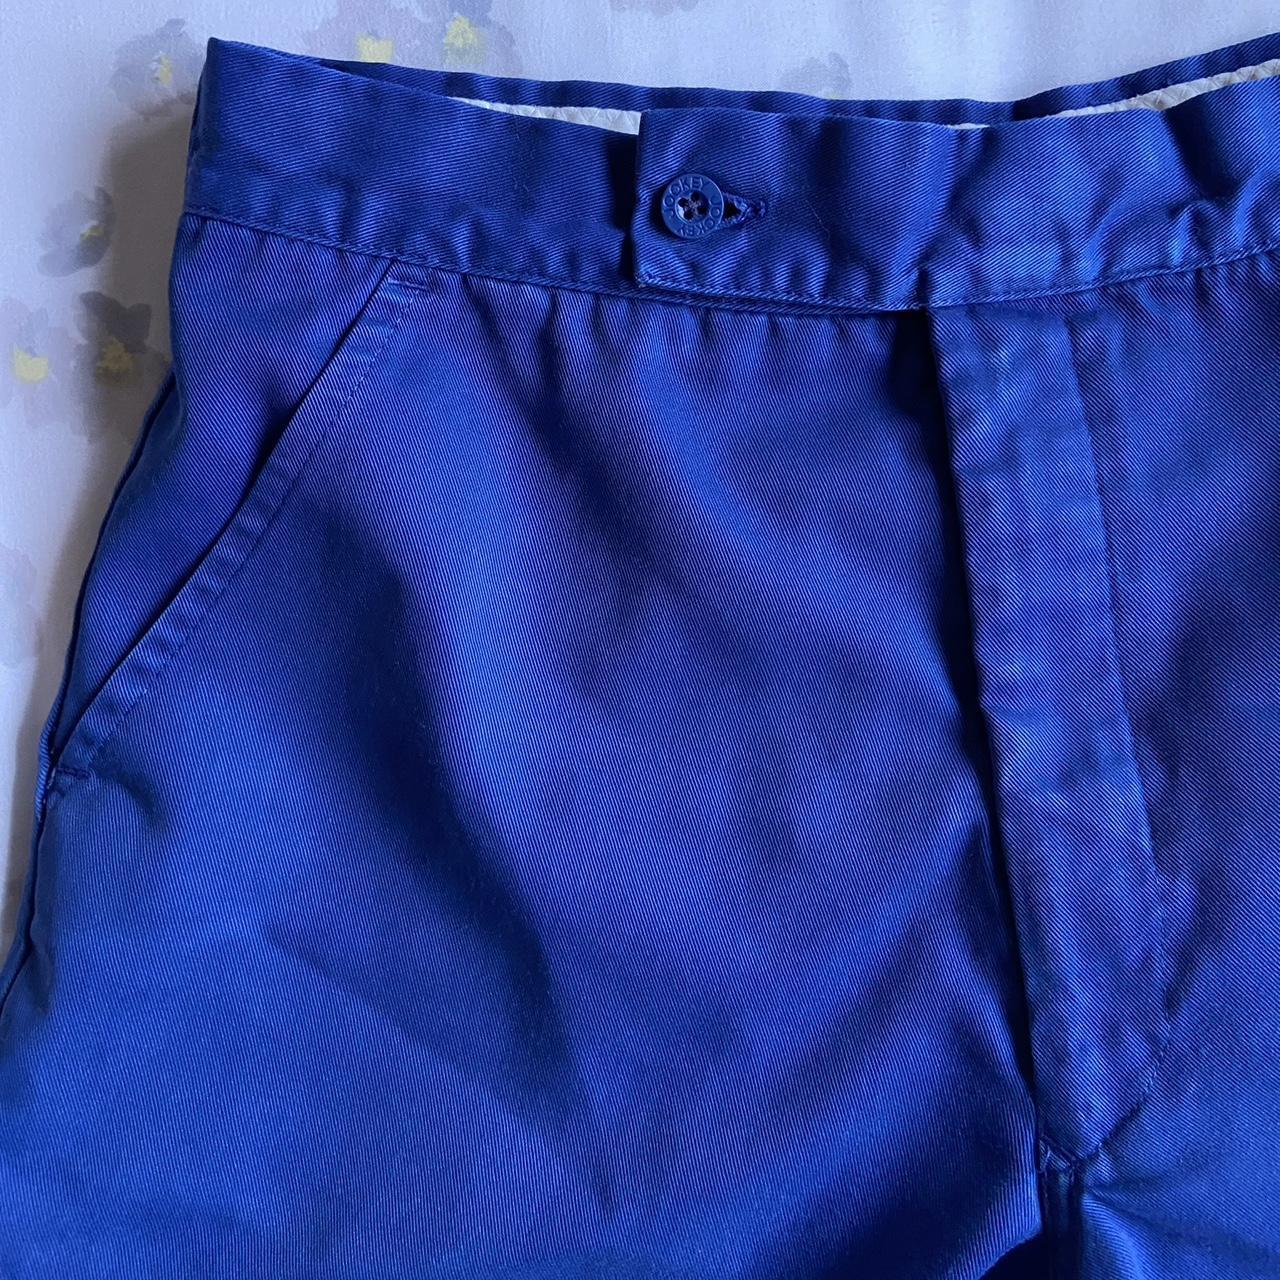 Jockey Women's Blue and White Shorts (2)